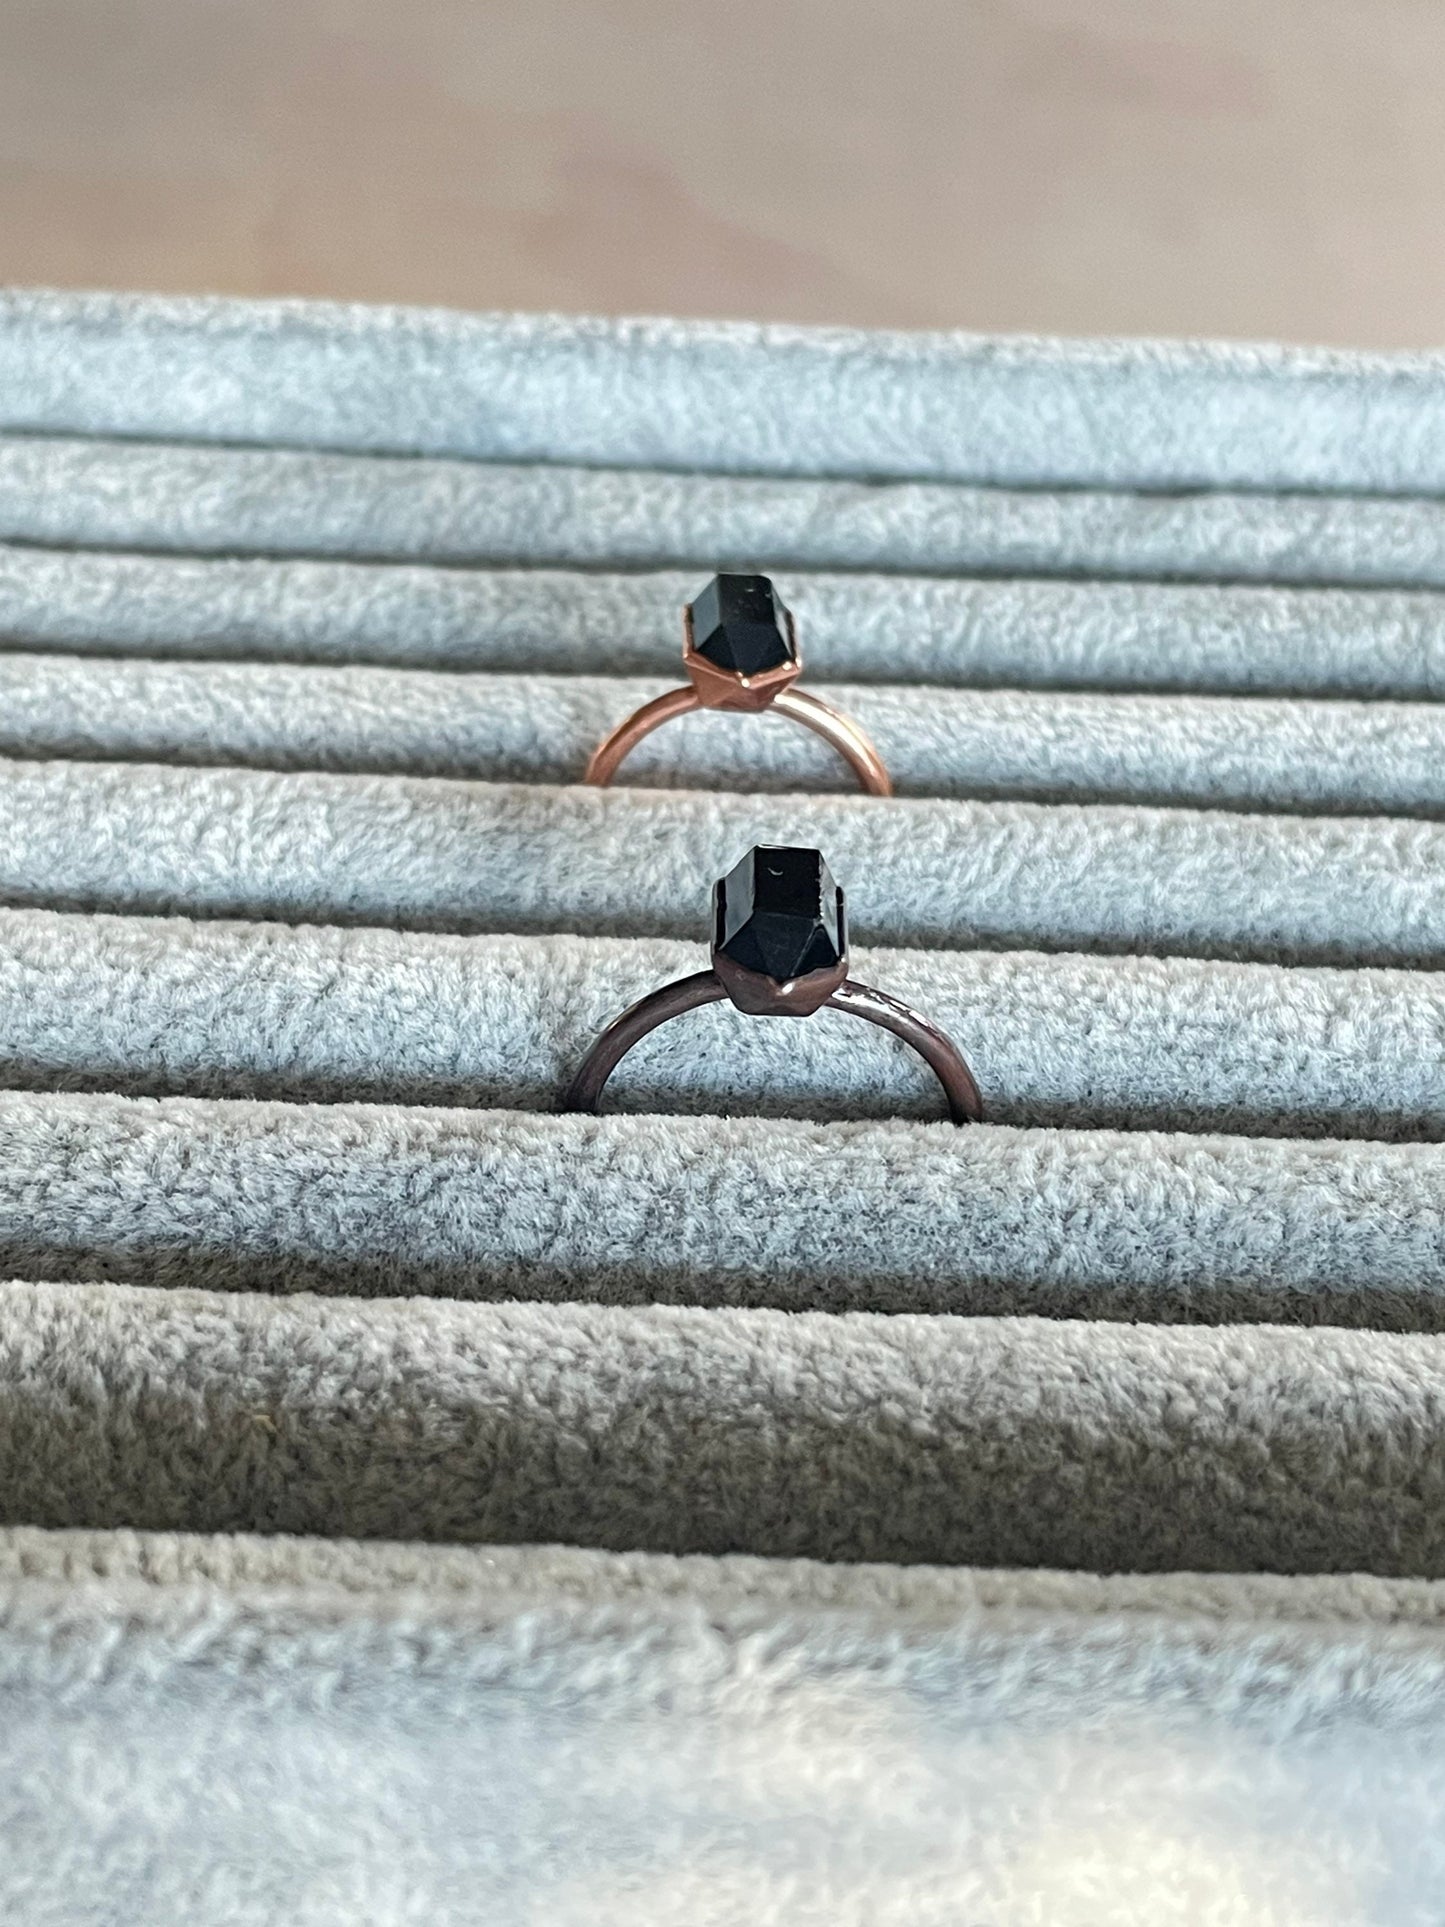 Black Onyx Solitare Ring 